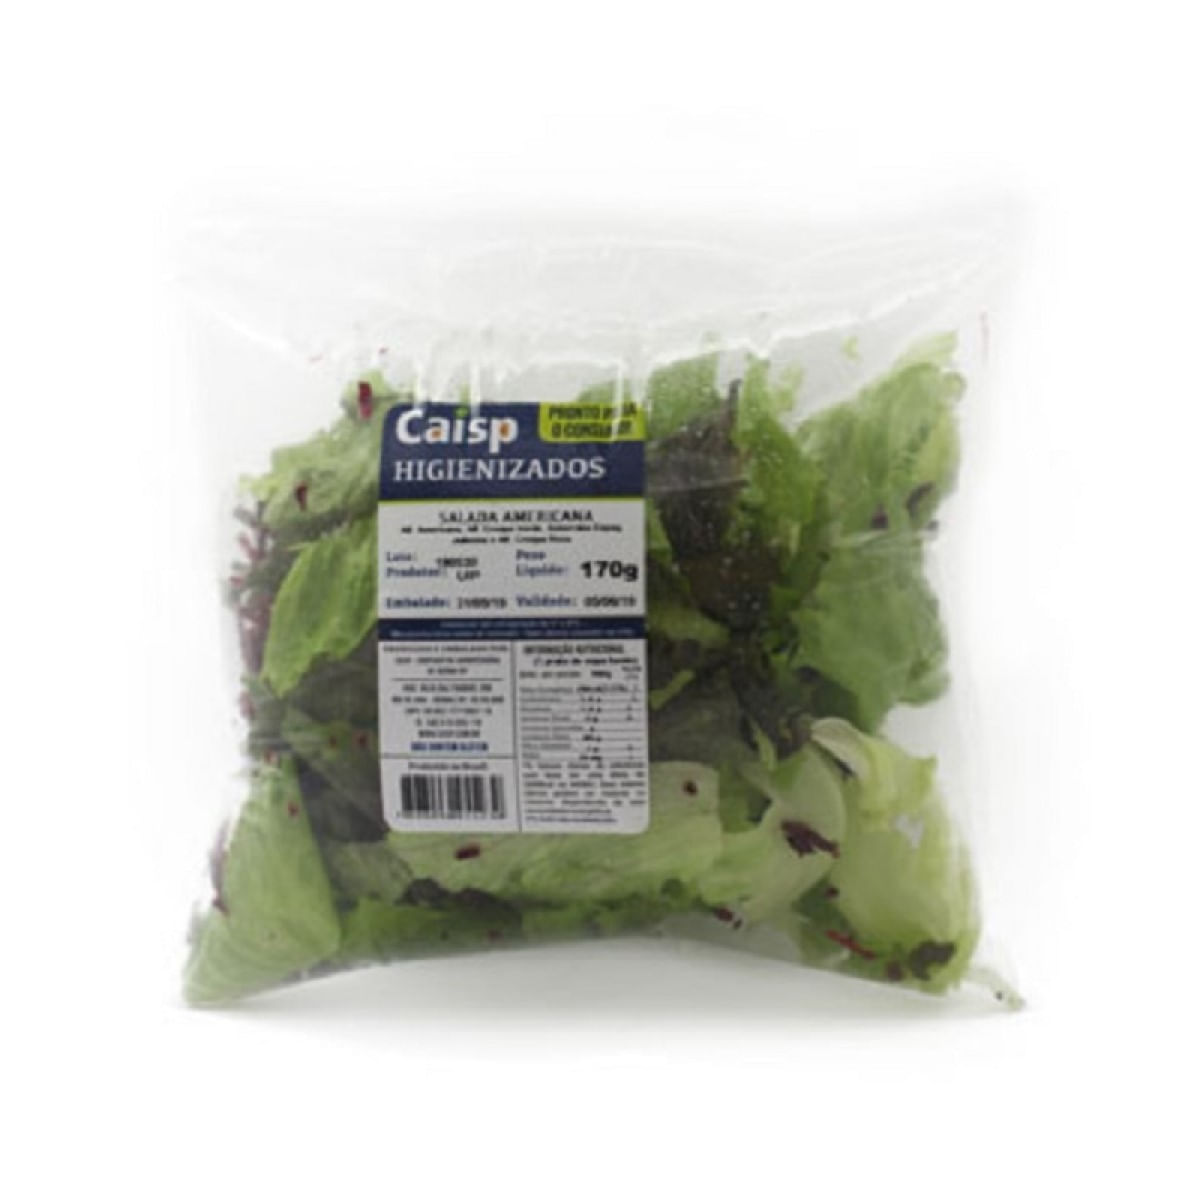 salada-americana-hig-caisp-170g-1.jpg